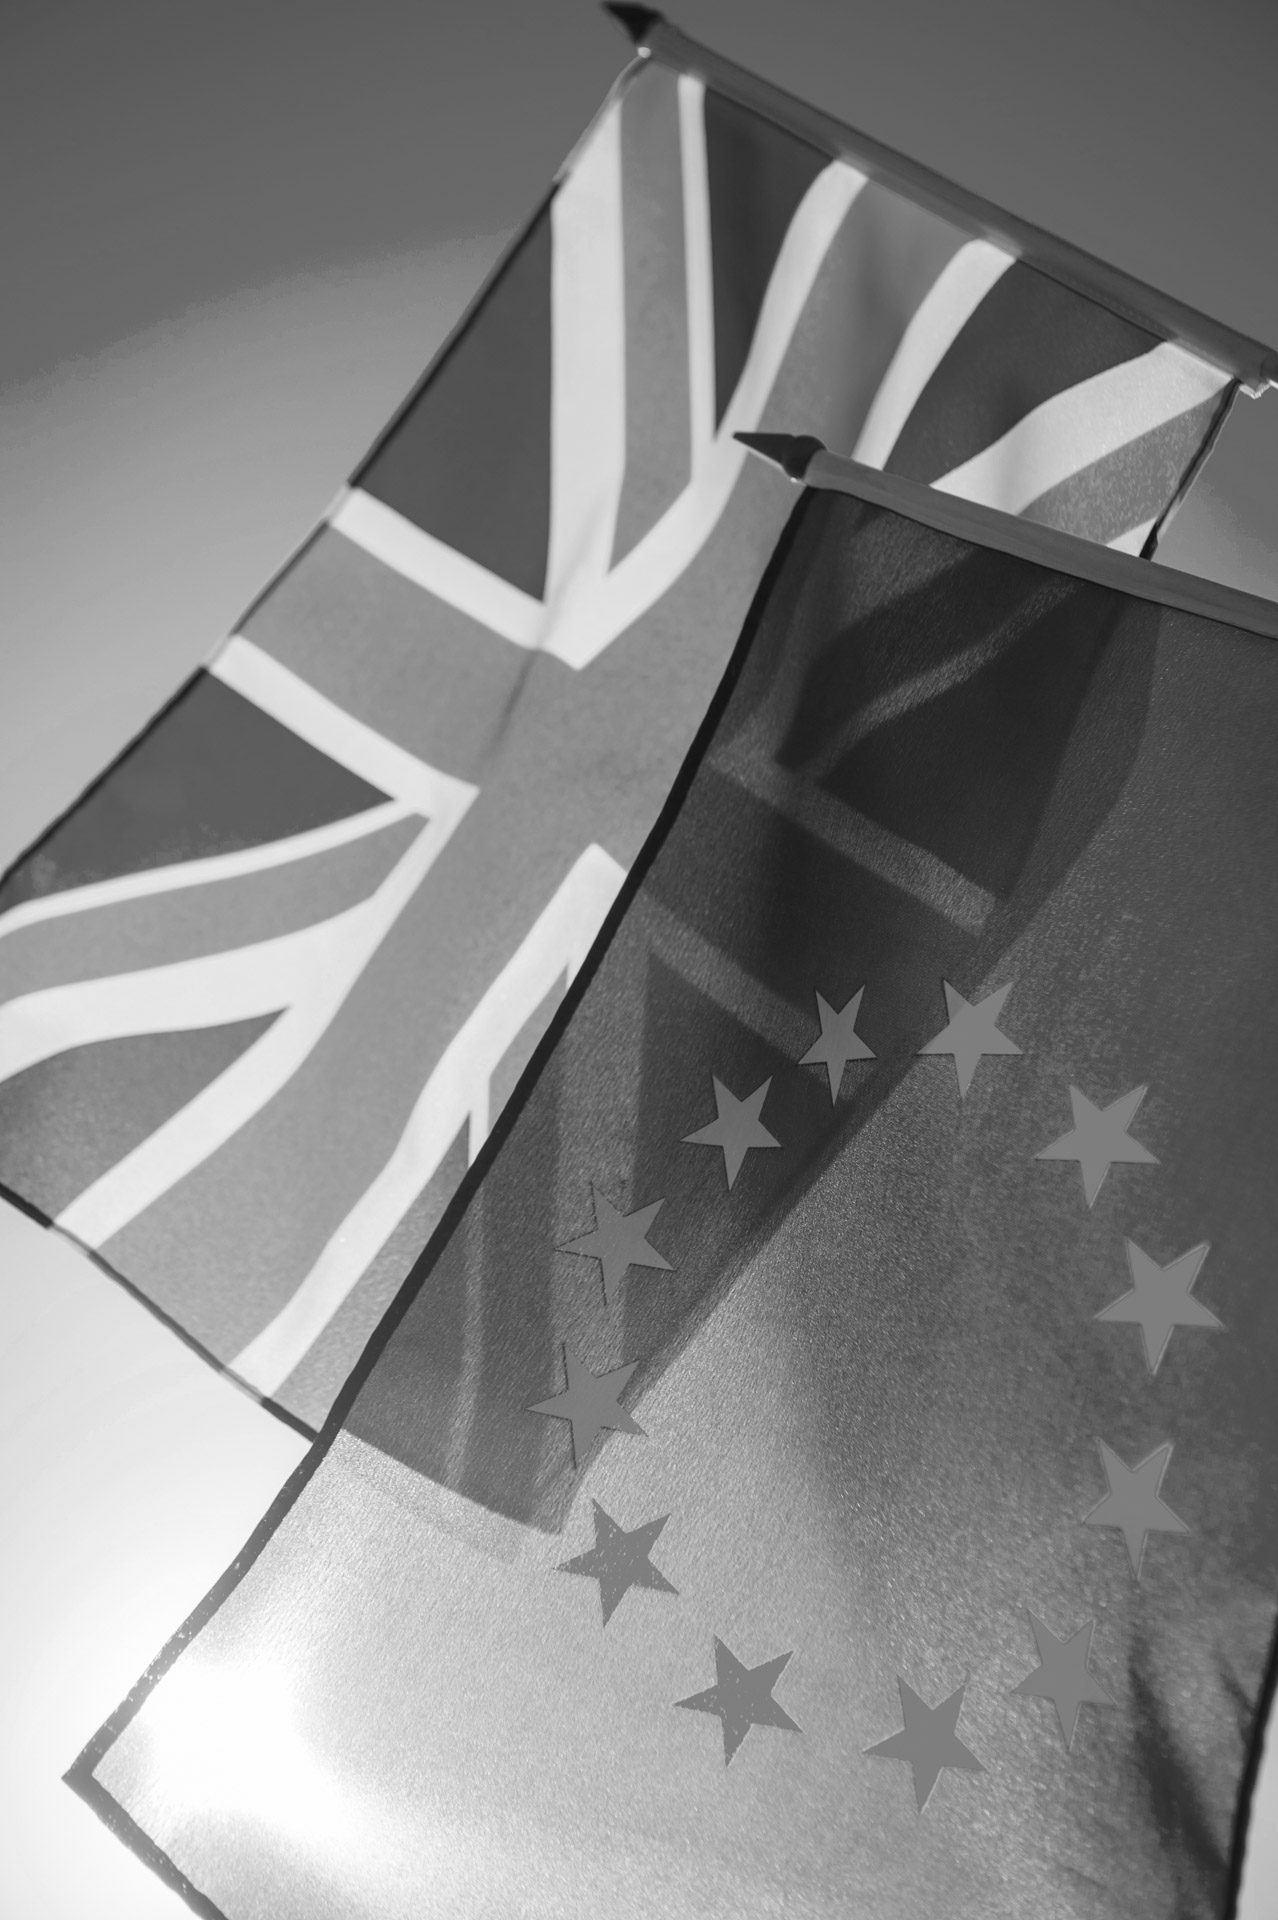 UK and EU flags black and white